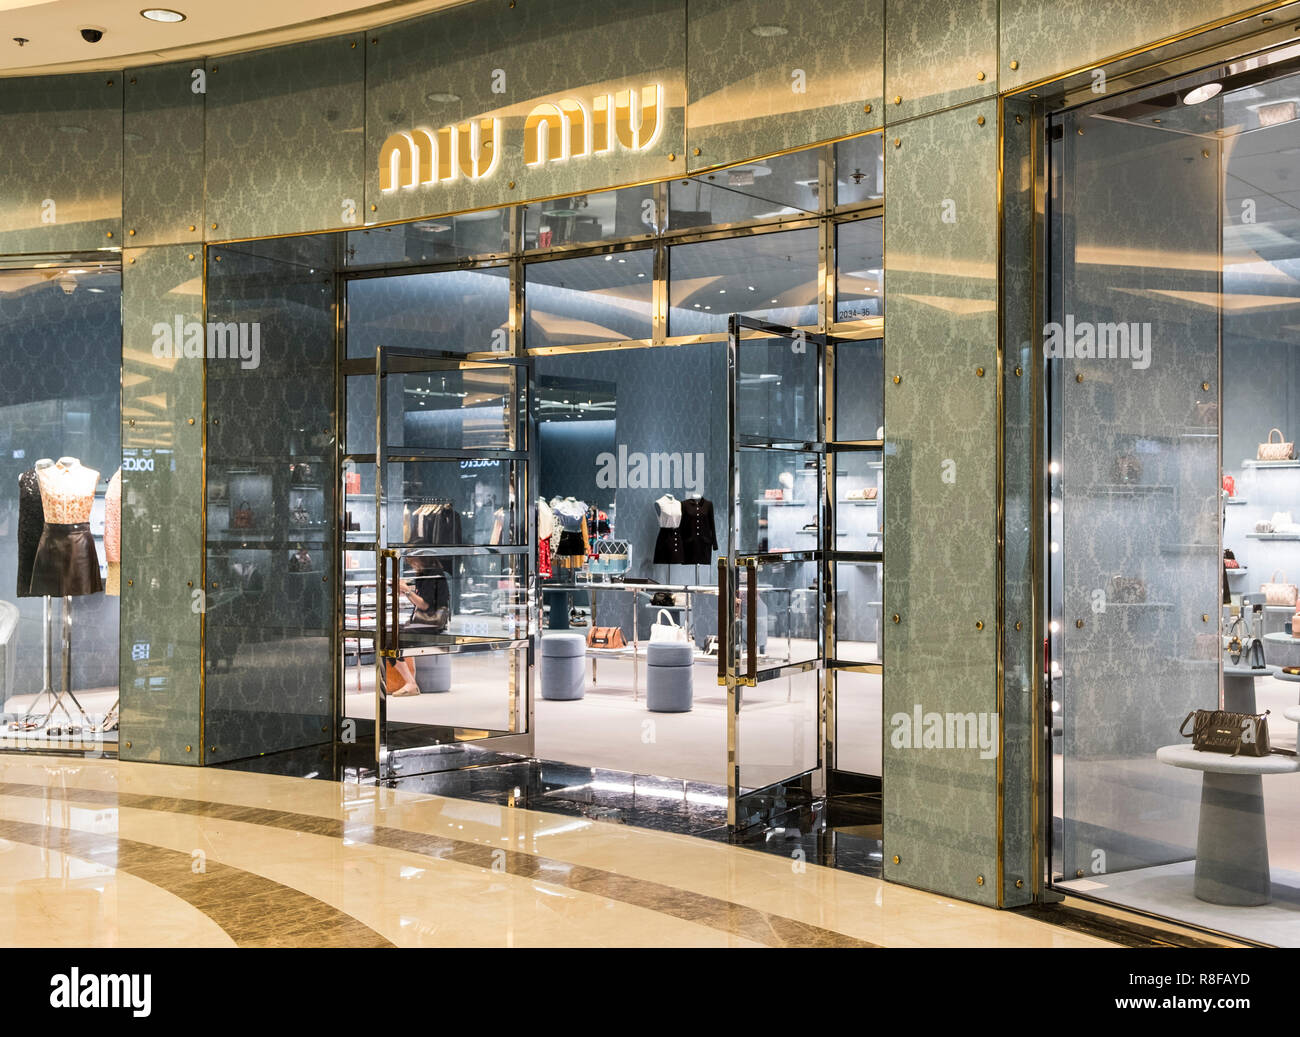 Hong Kong, April 7, 2019: Miu Miu store in Hong Kong Stock Photo - Alamy